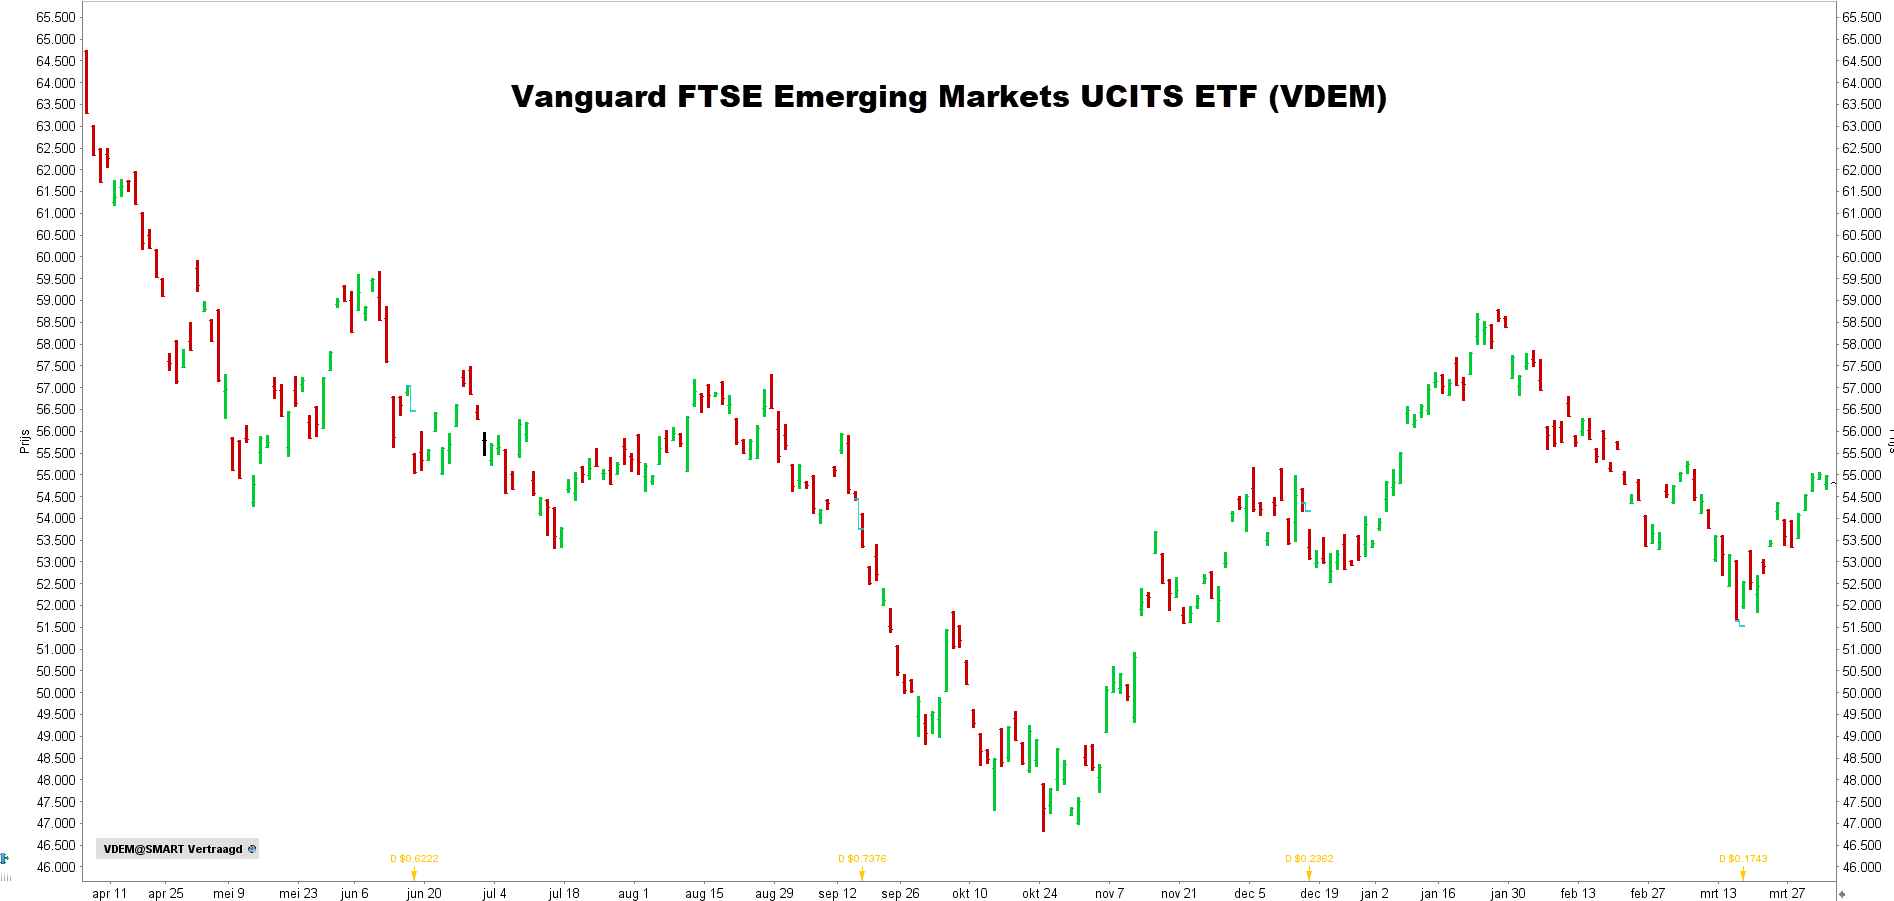 Vanguard FTSE Emerging Markets UCITS ETF (VDEM) | Vanguard FTSE Emerging Markets UCITS ETF koers | Emerging Markets ETF